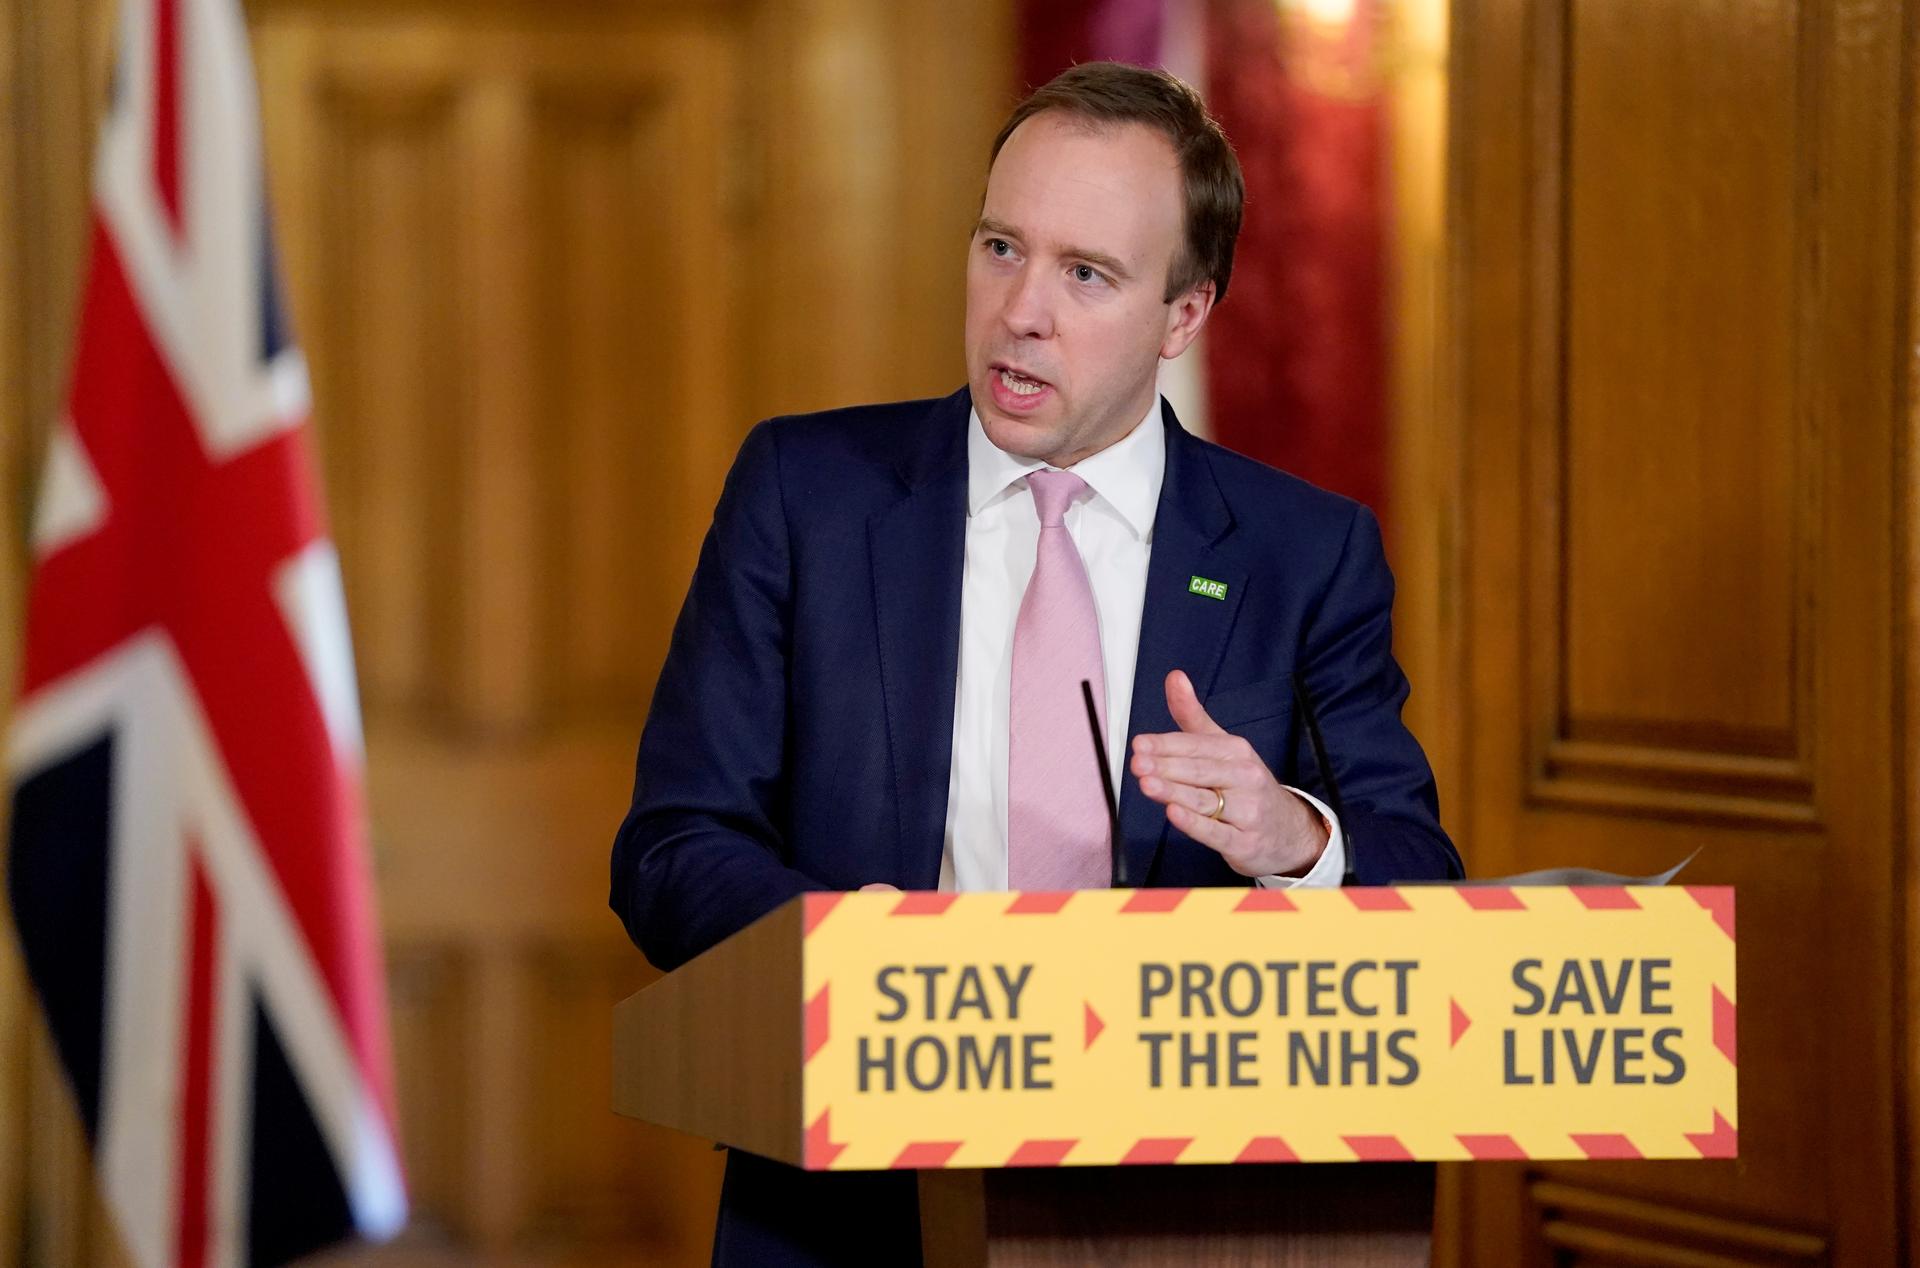 'Too early' to lift UK lockdown but coronavirus outbreak peaking, minister says